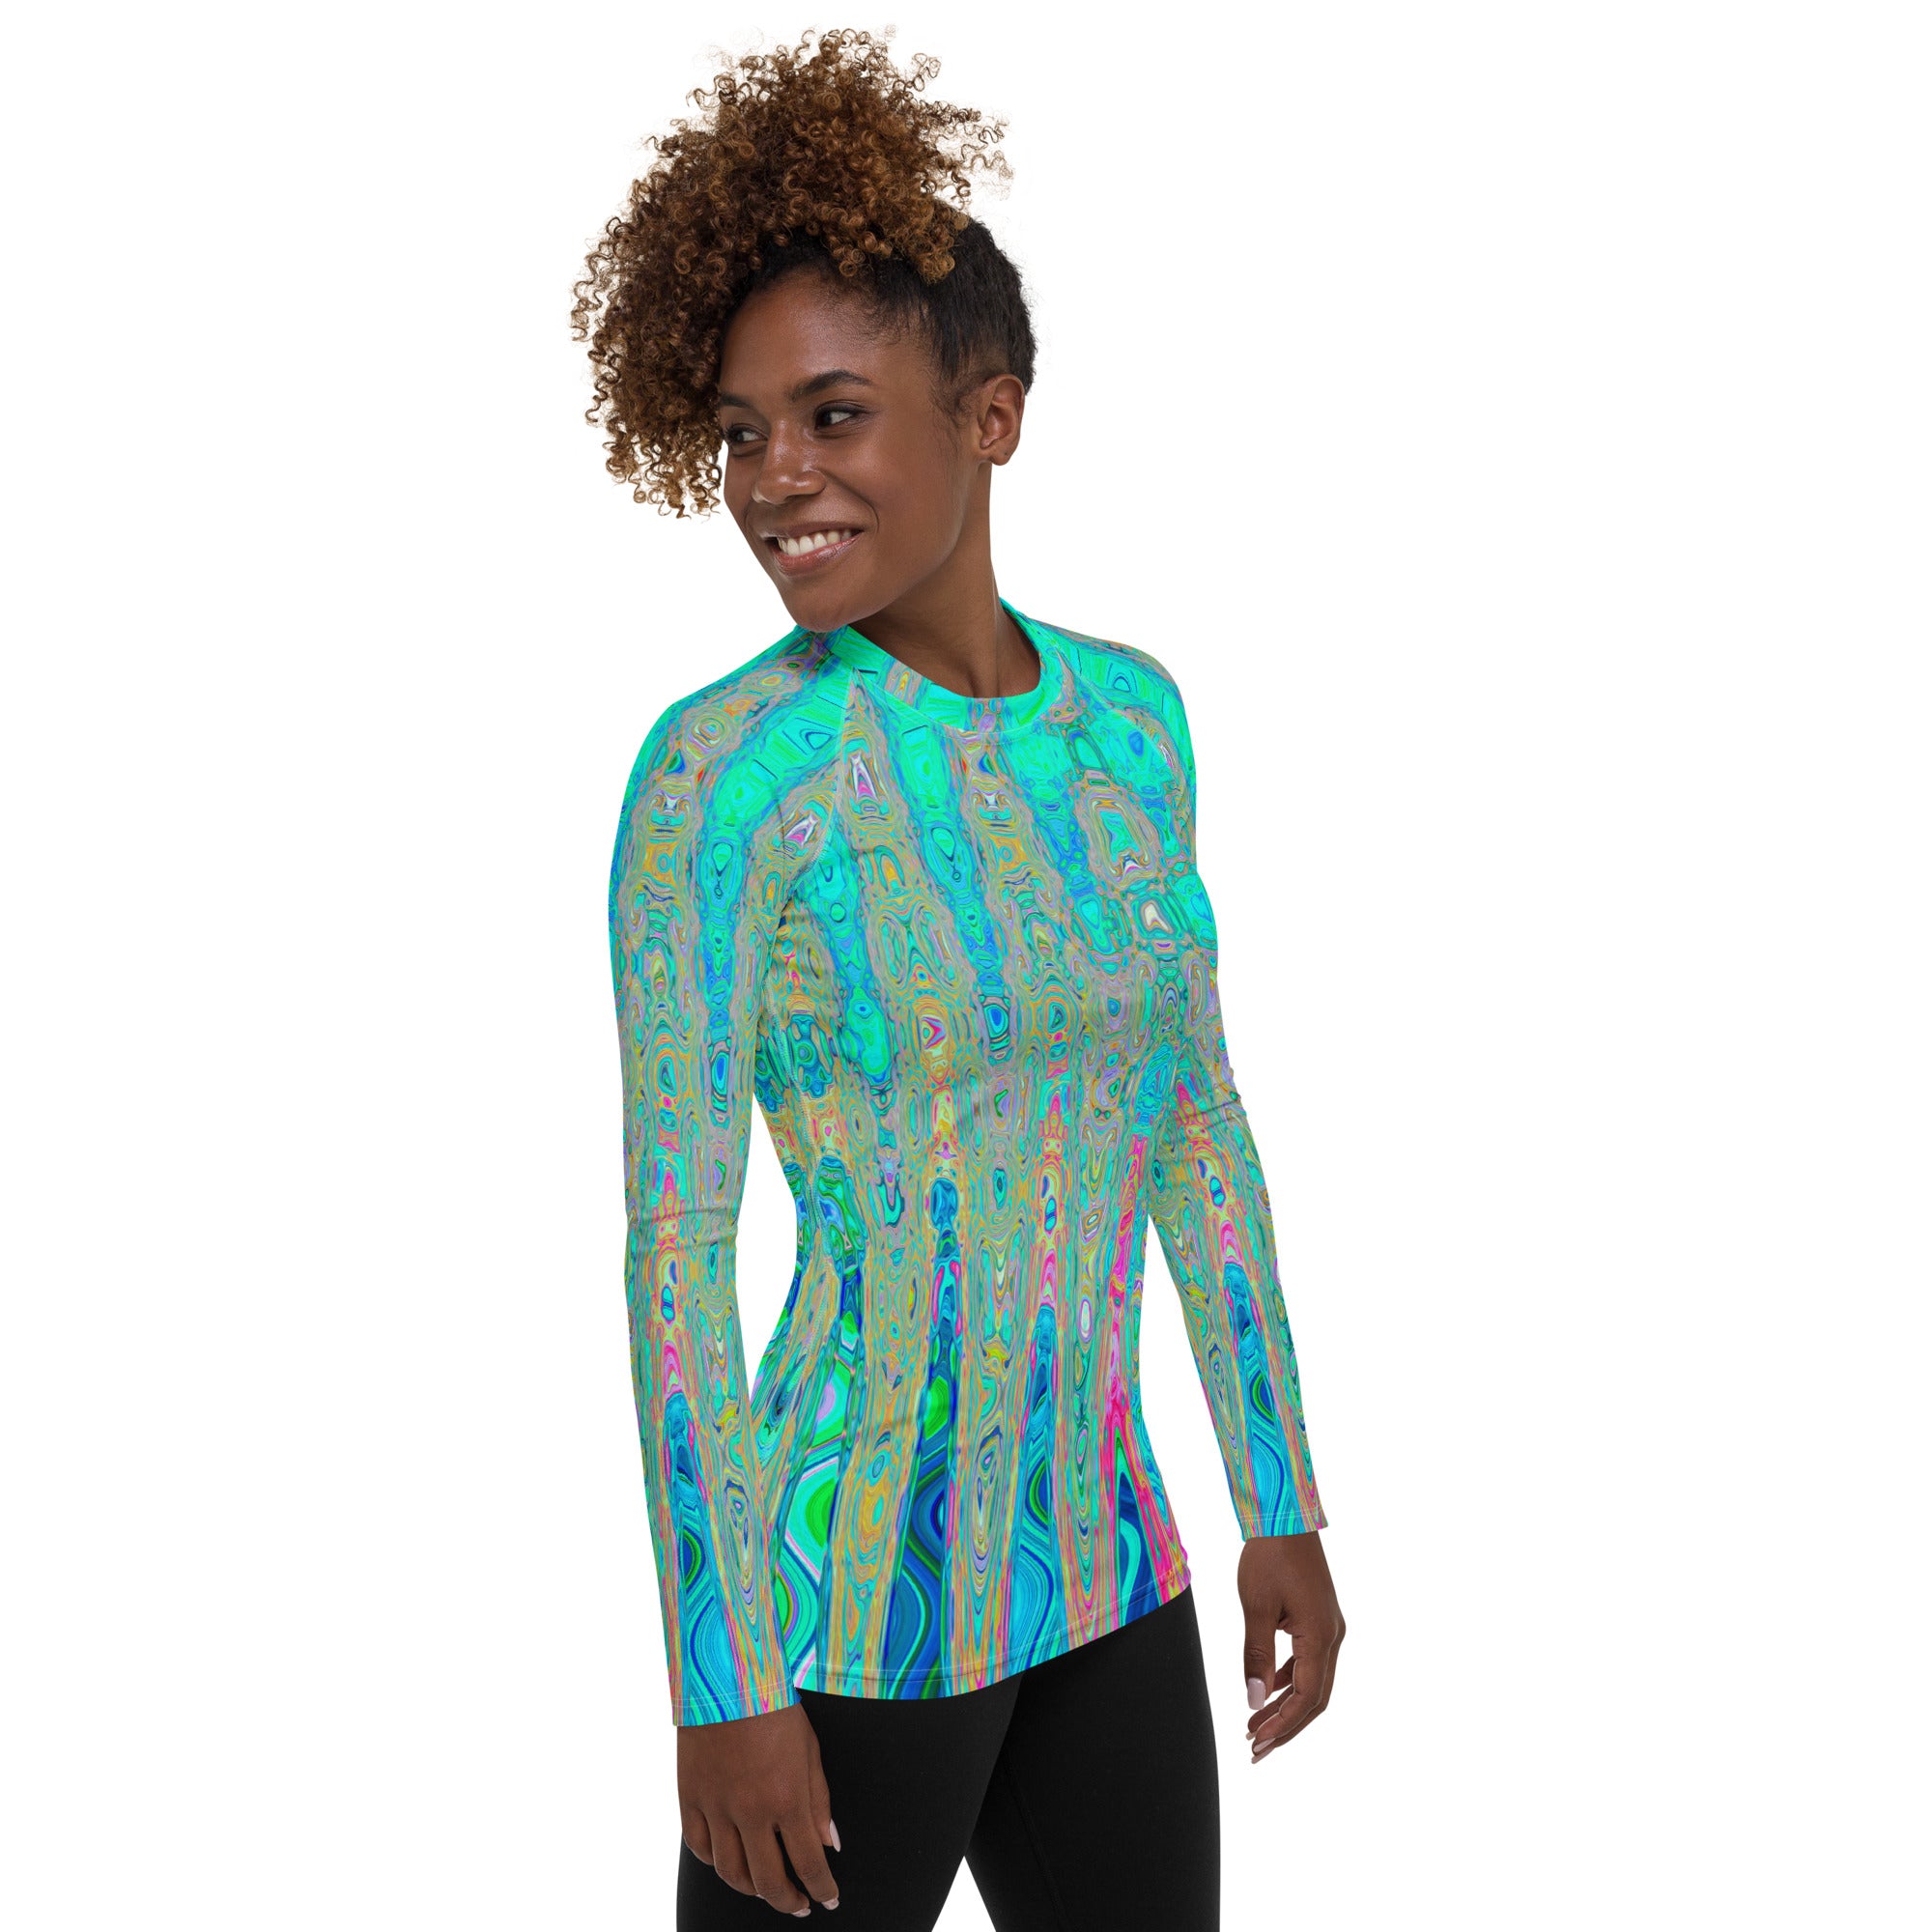 Women's Rash Guard Shirts | Groovy Abstract Retro Rainbow Atomic Waves